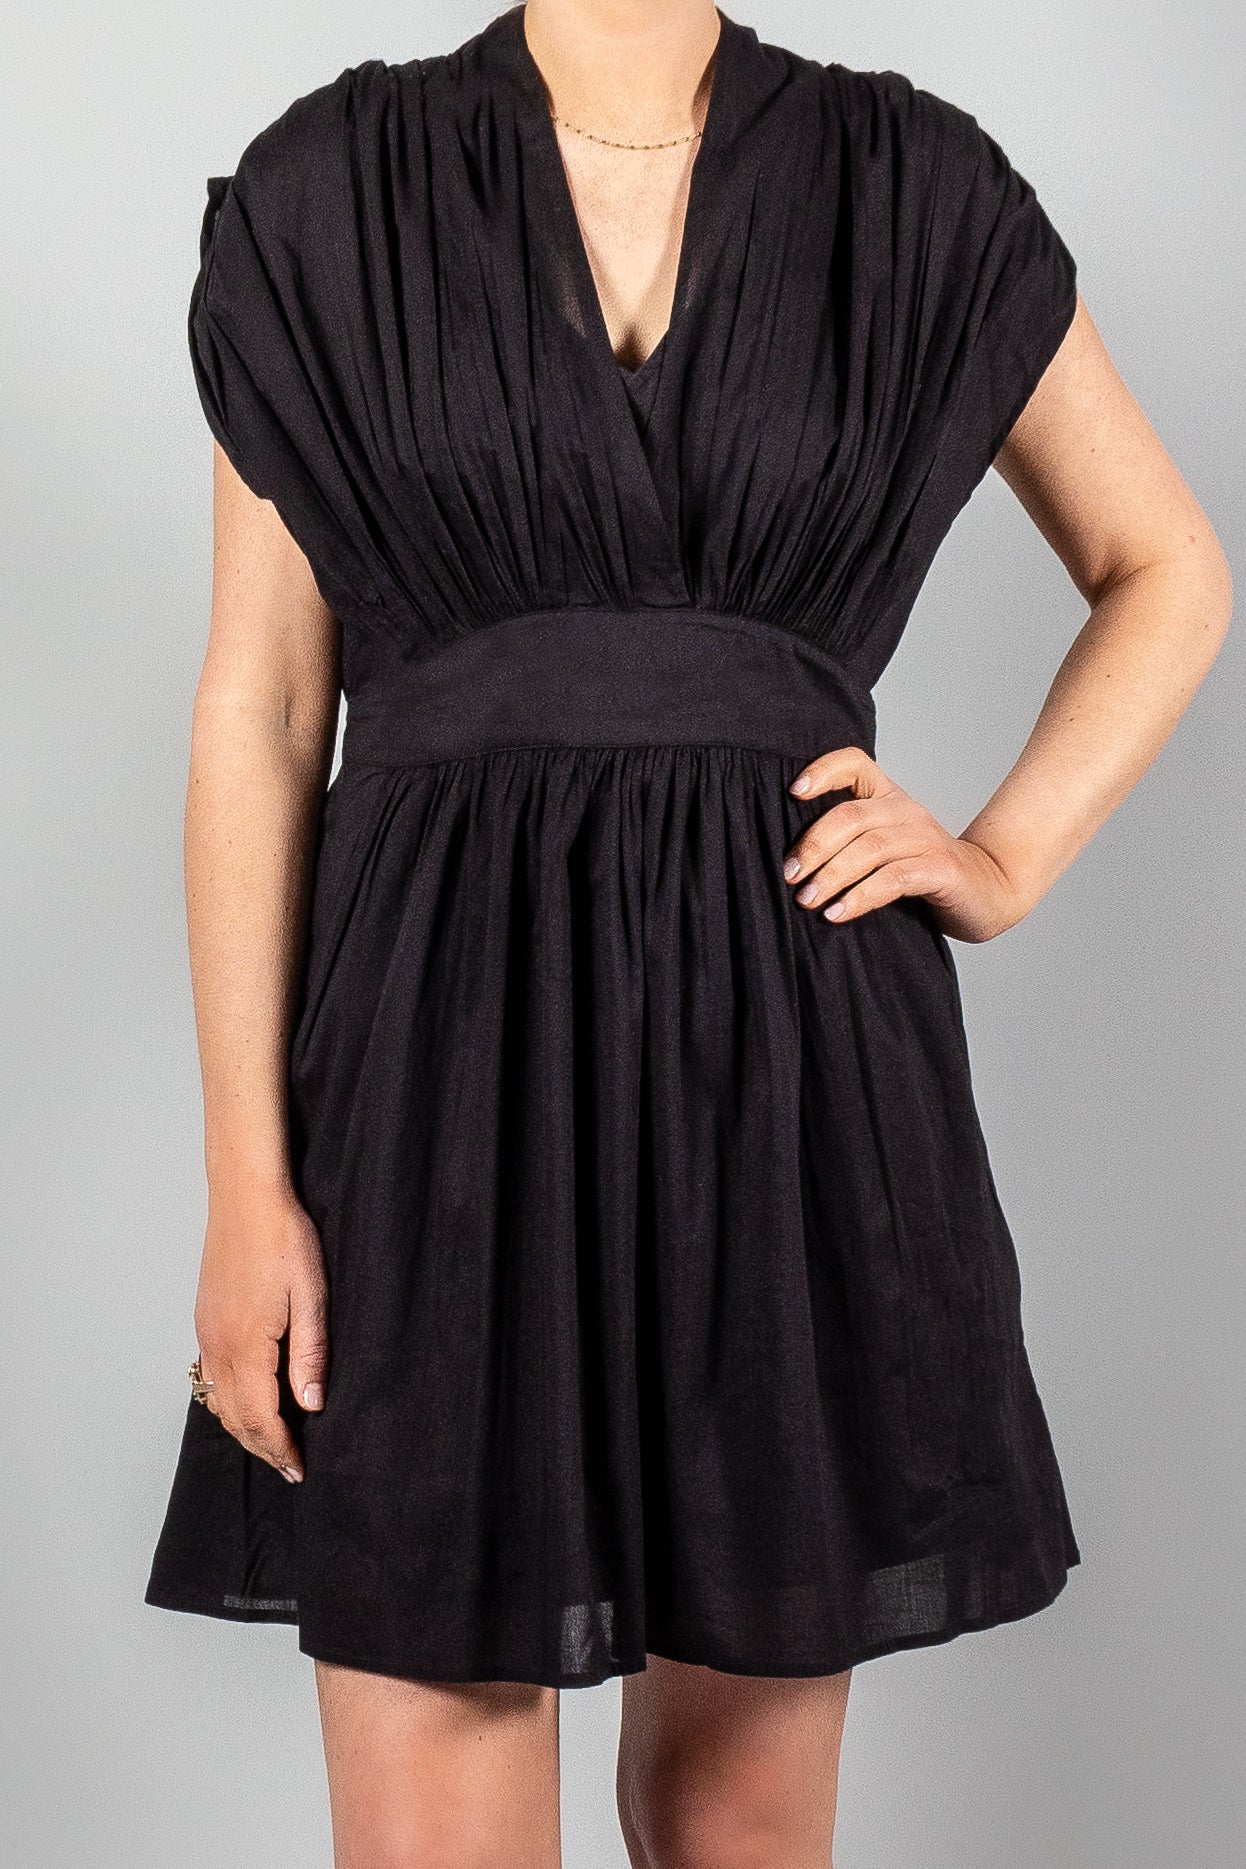 Xirena Brinsley Dress-Dresses and Jumpsuits-Misch-Boutique-Vancouver-Canada-misch.ca